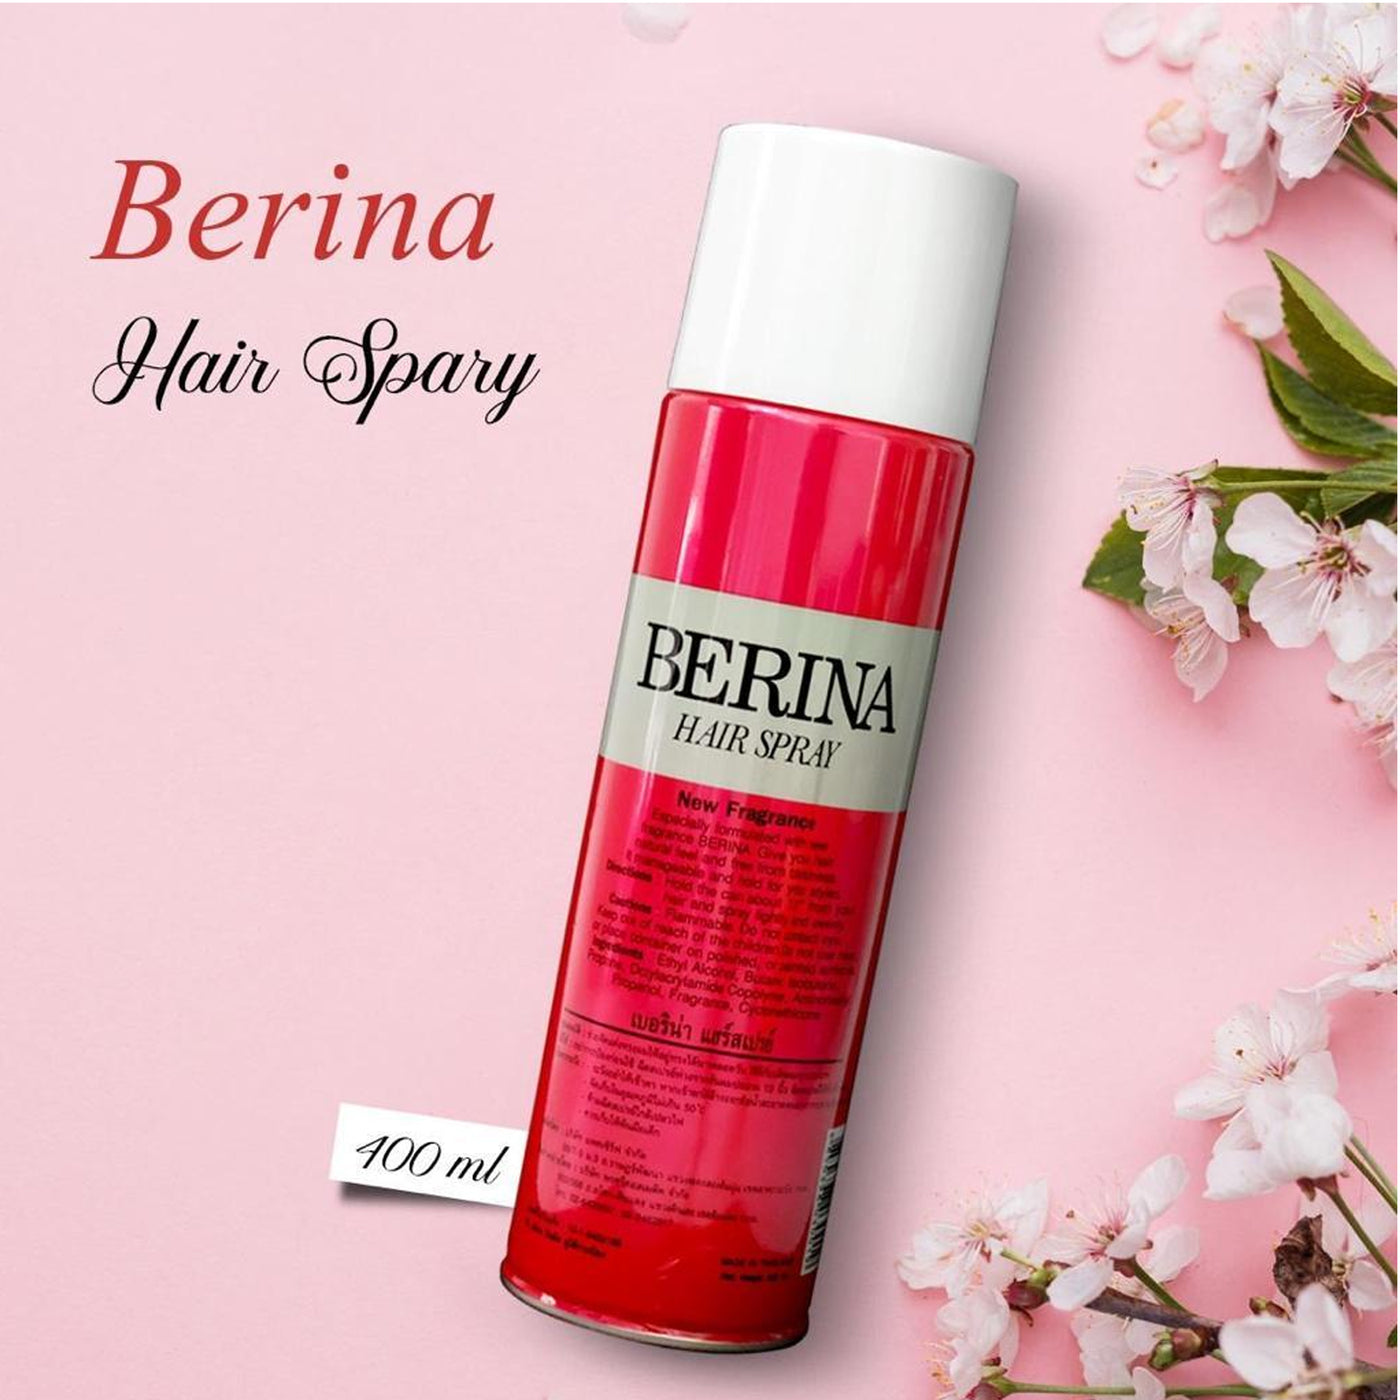 Berina Hair Spray- Super Firm Hold - 400ml